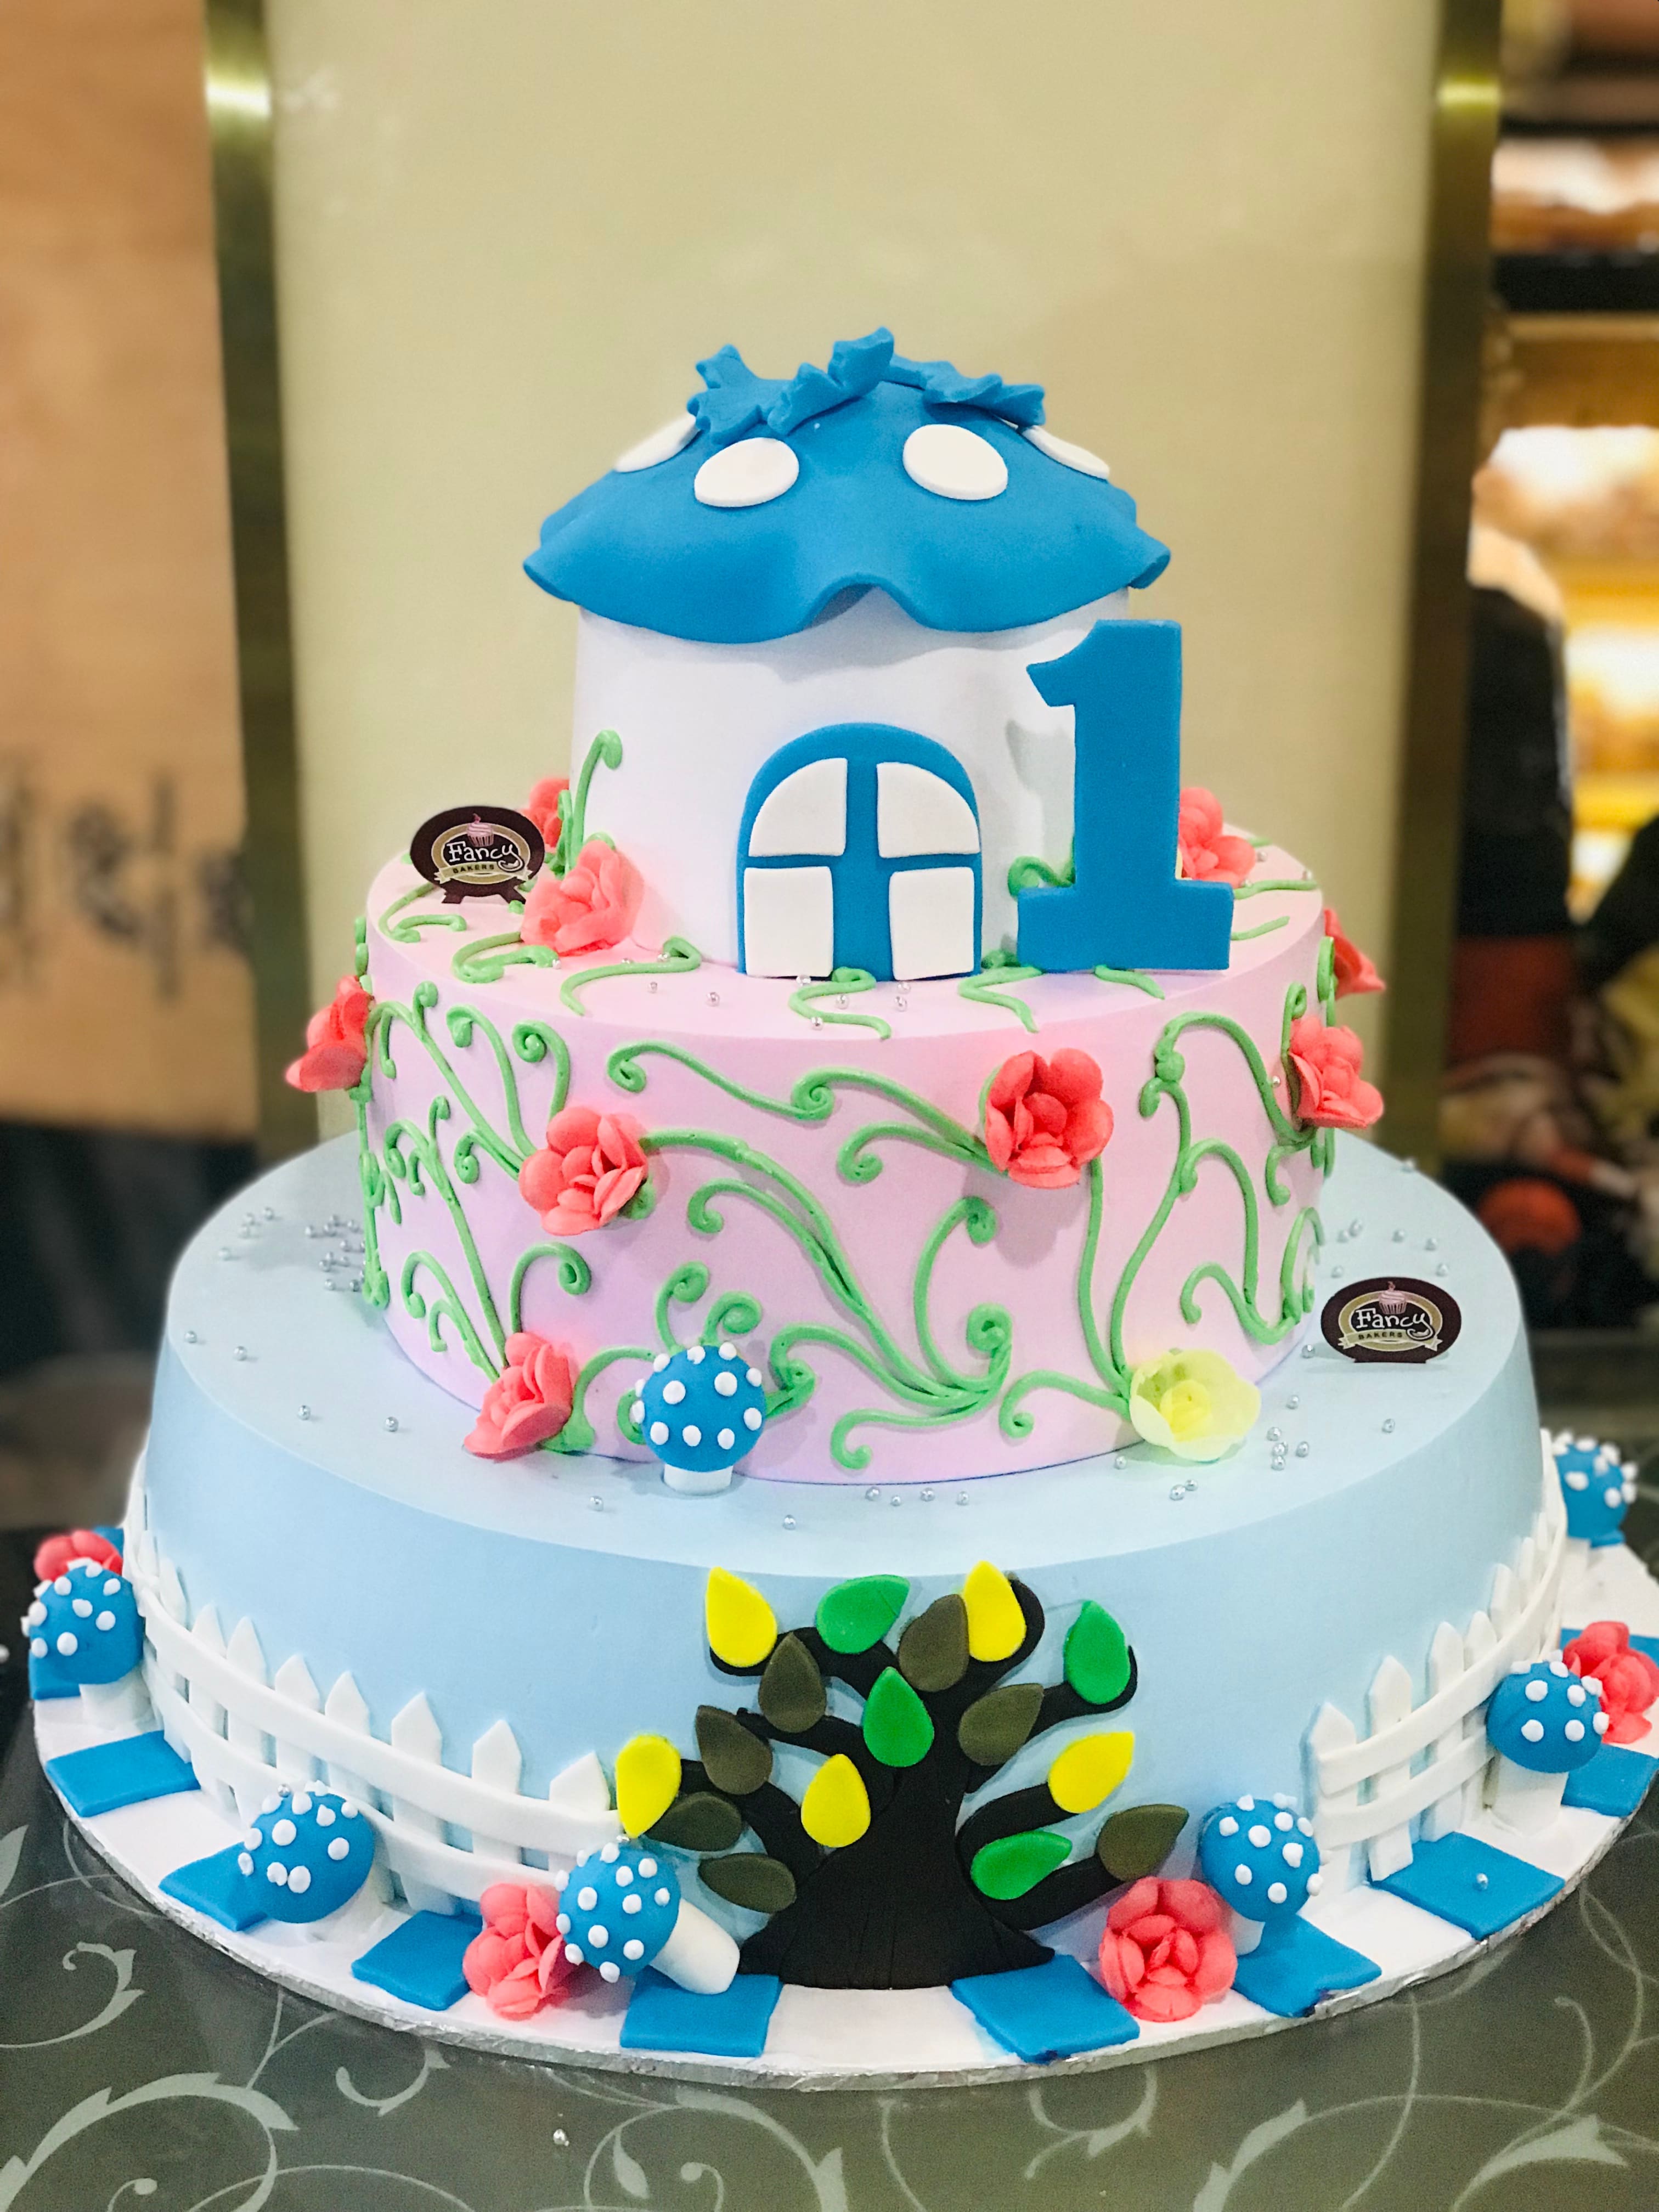 3 Best Cake Shops in Varanasi, UP - ThreeBestRated